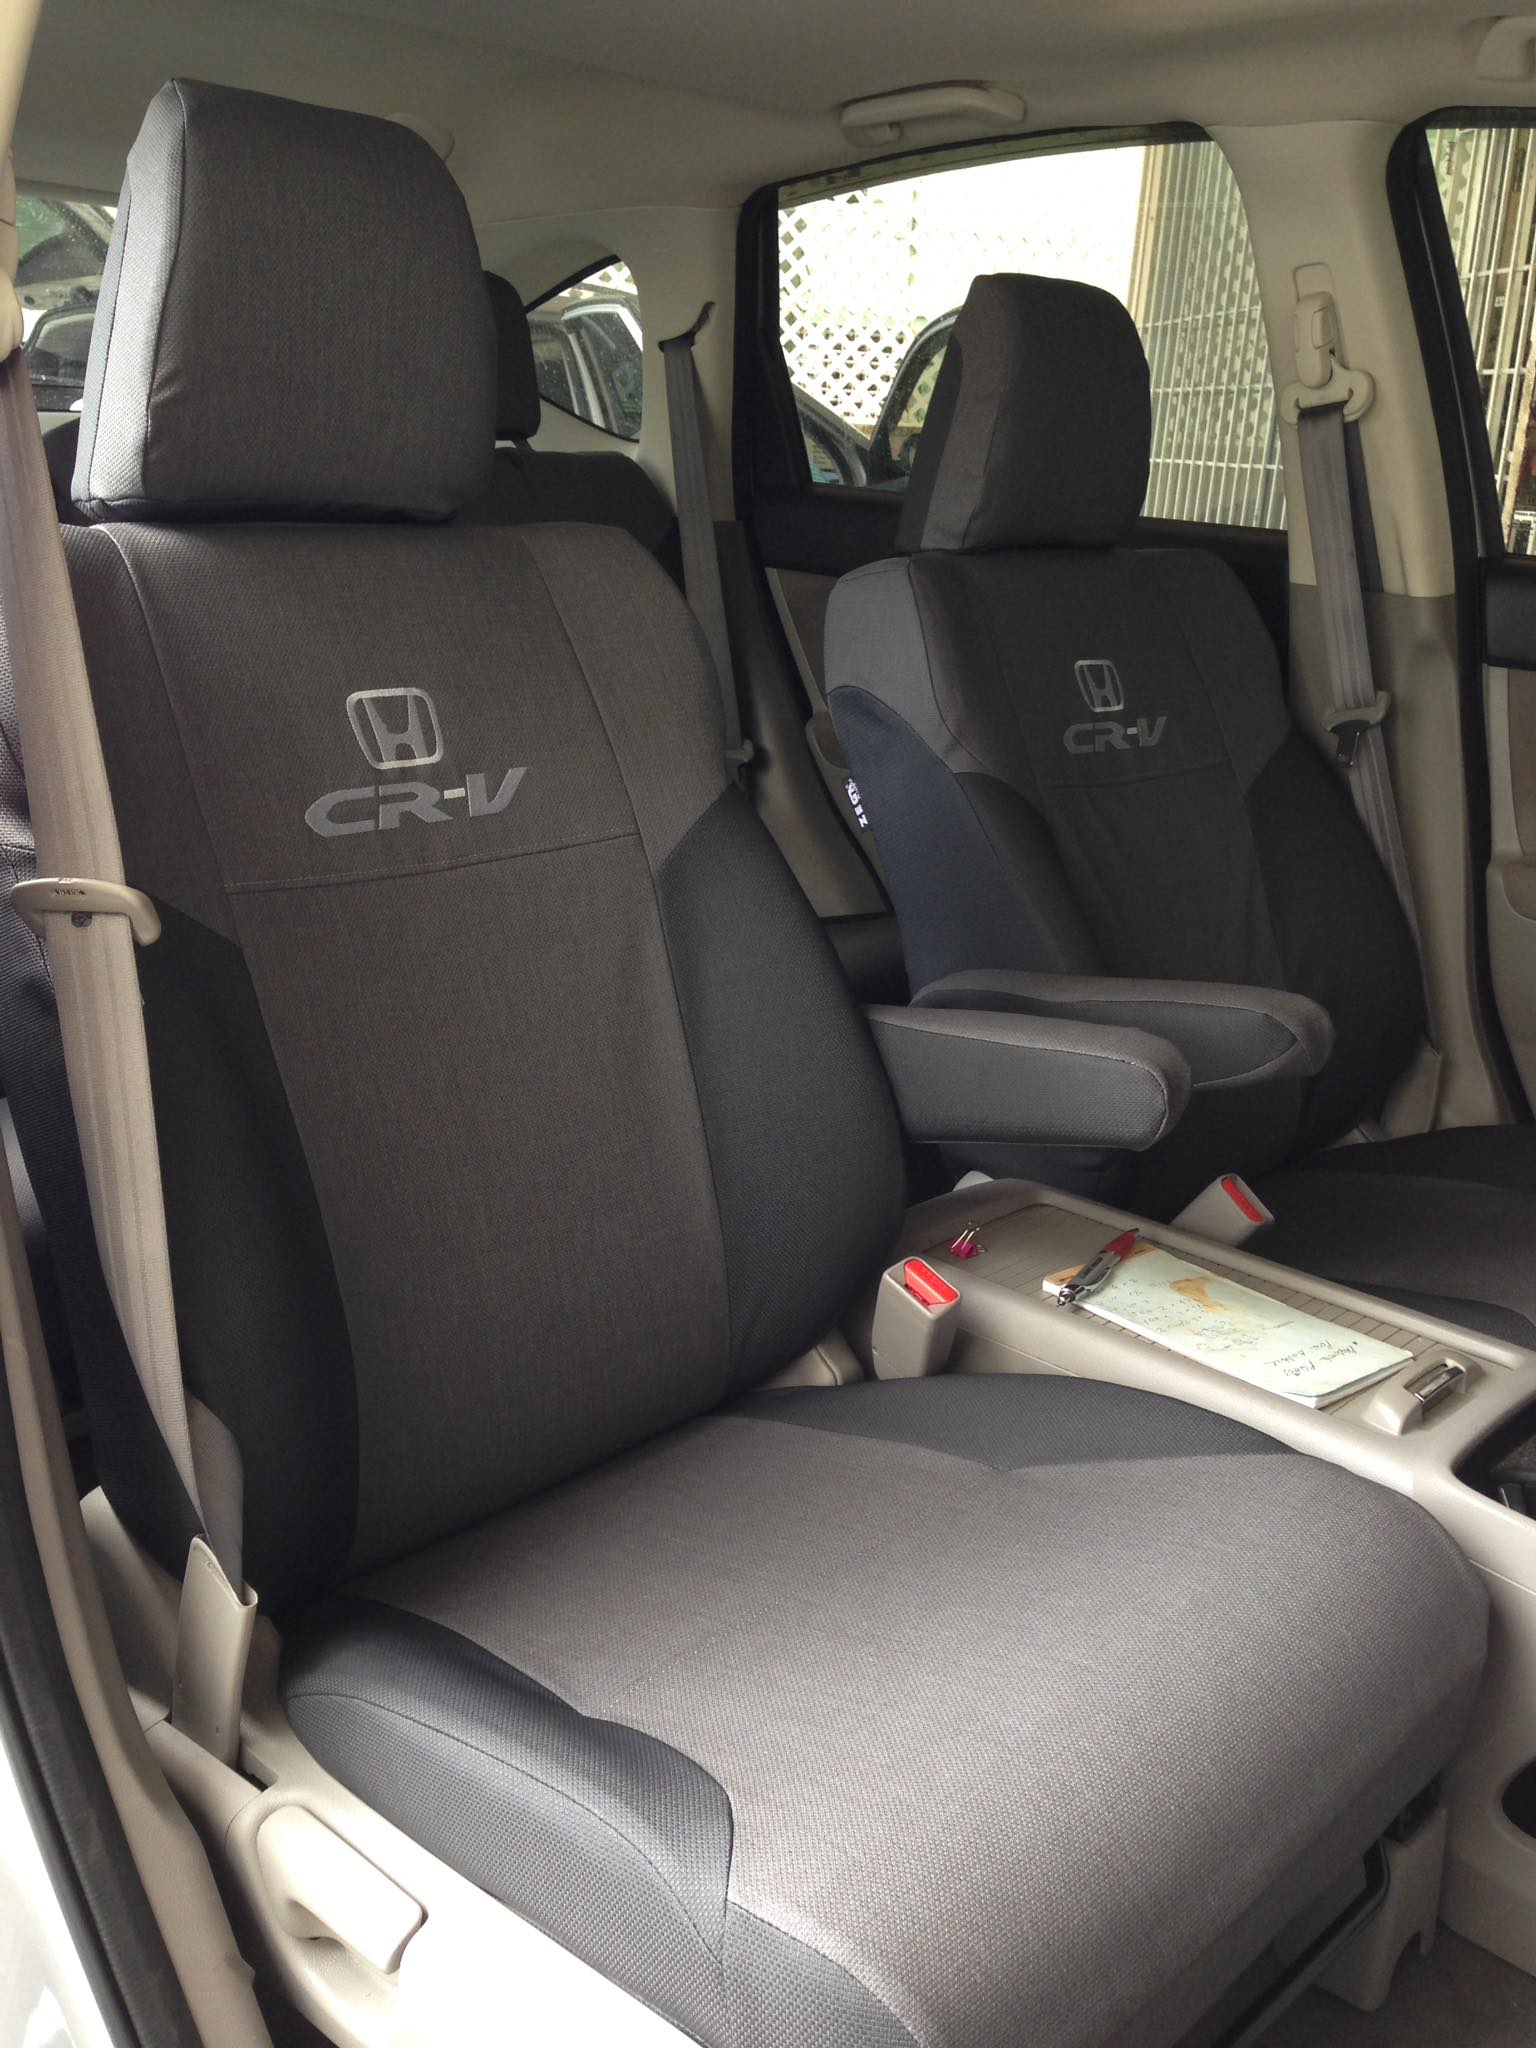 Honda CR-V Seat Covers